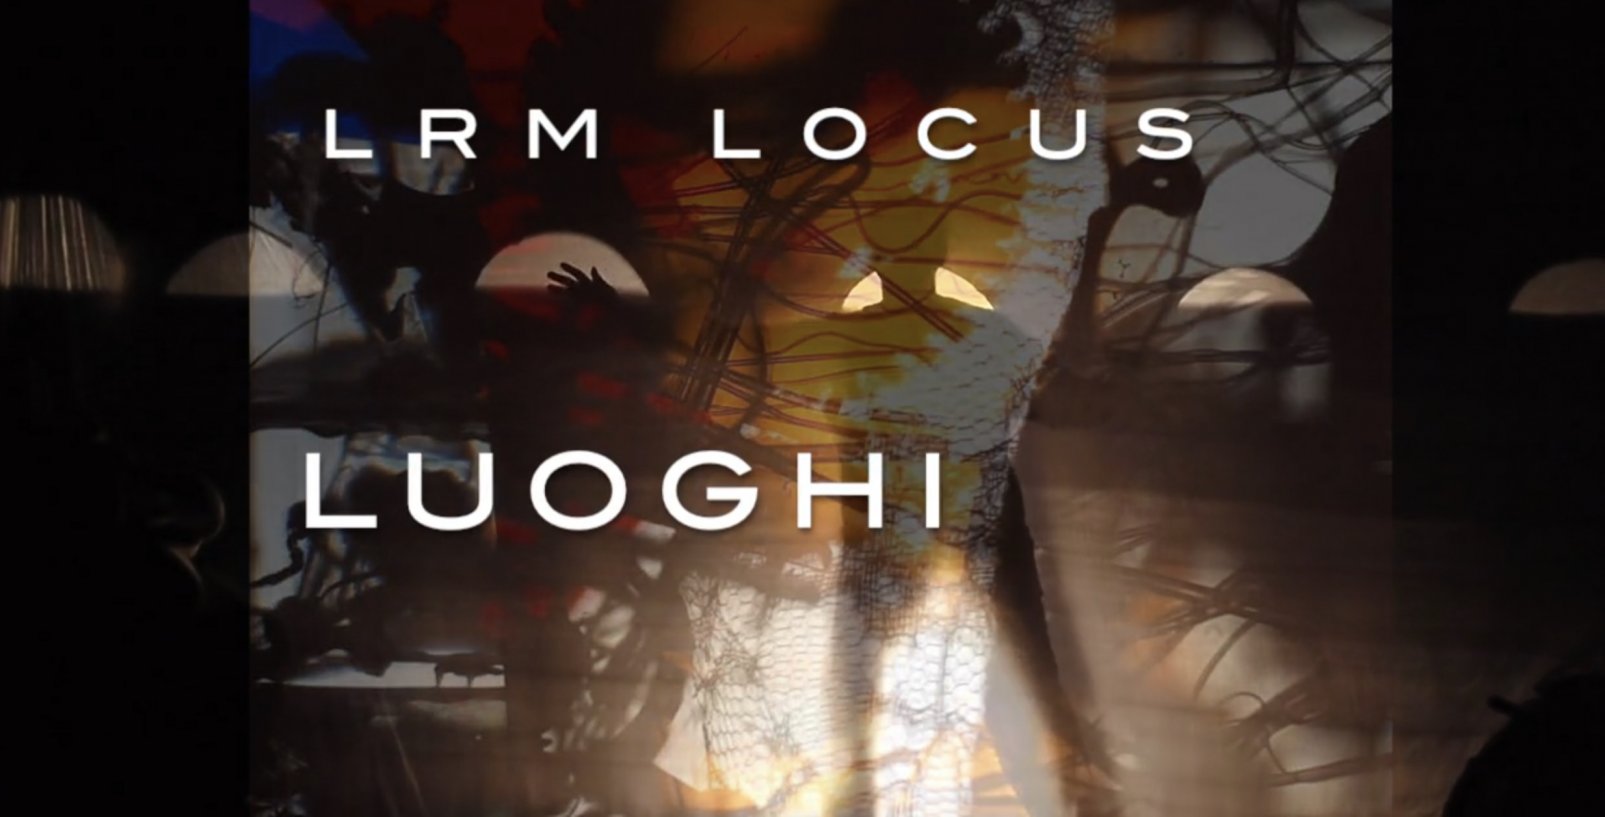 Luoghi (work in progress (2022) - LRM Performance / Locus 